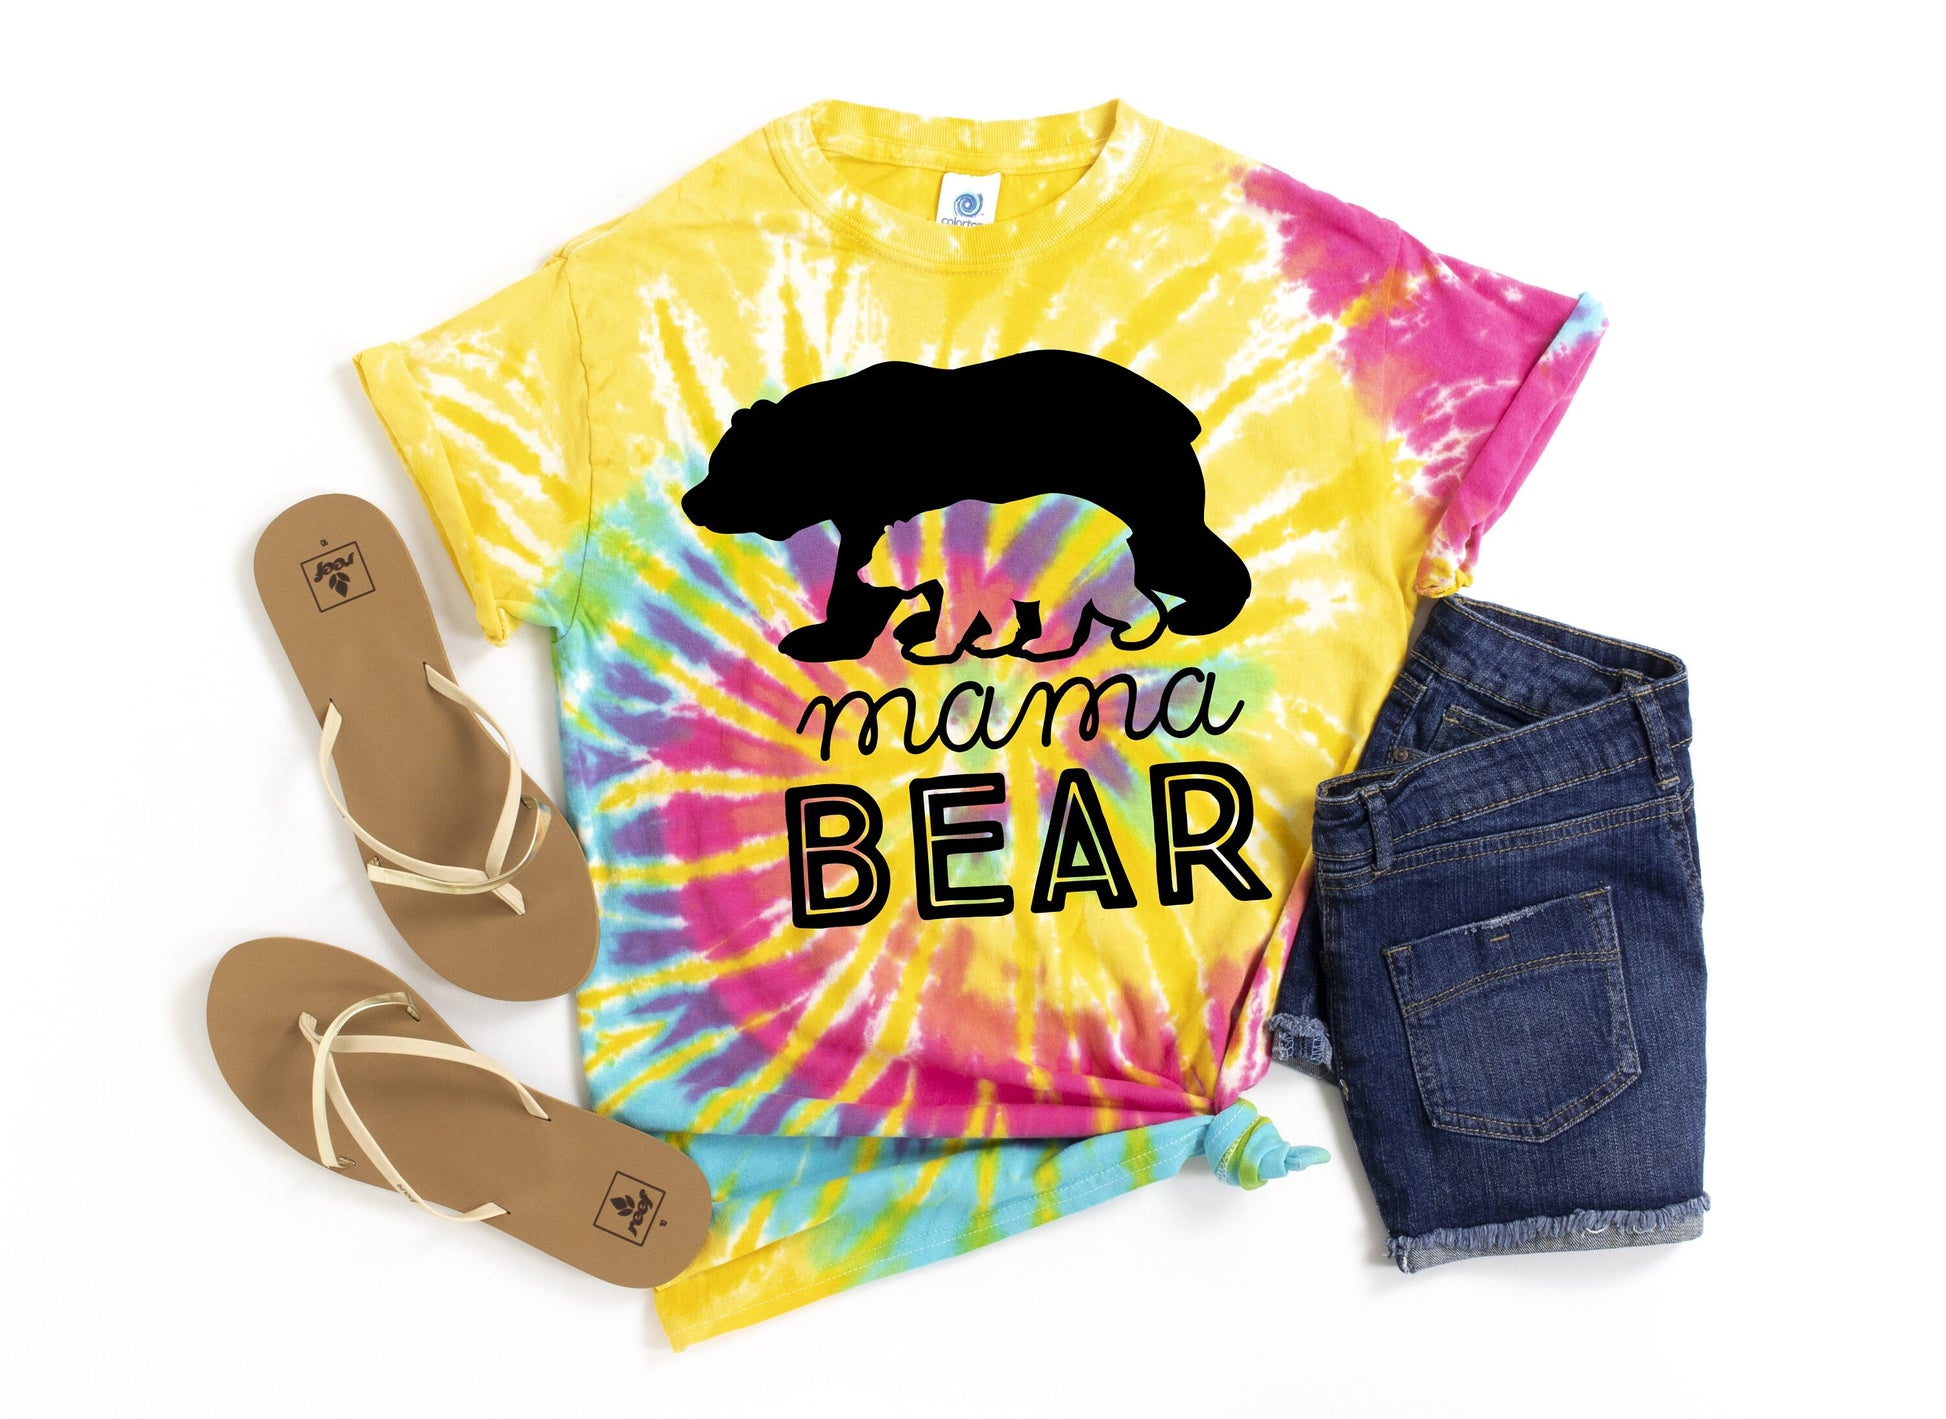 Mama Bear 2 Aurora Tie Dye t-shirt - Kids and Adults Sizes - Tie Dye Festival Shirt - Mama Bear Tee - Mama Bear Shirt - Gift for Mom